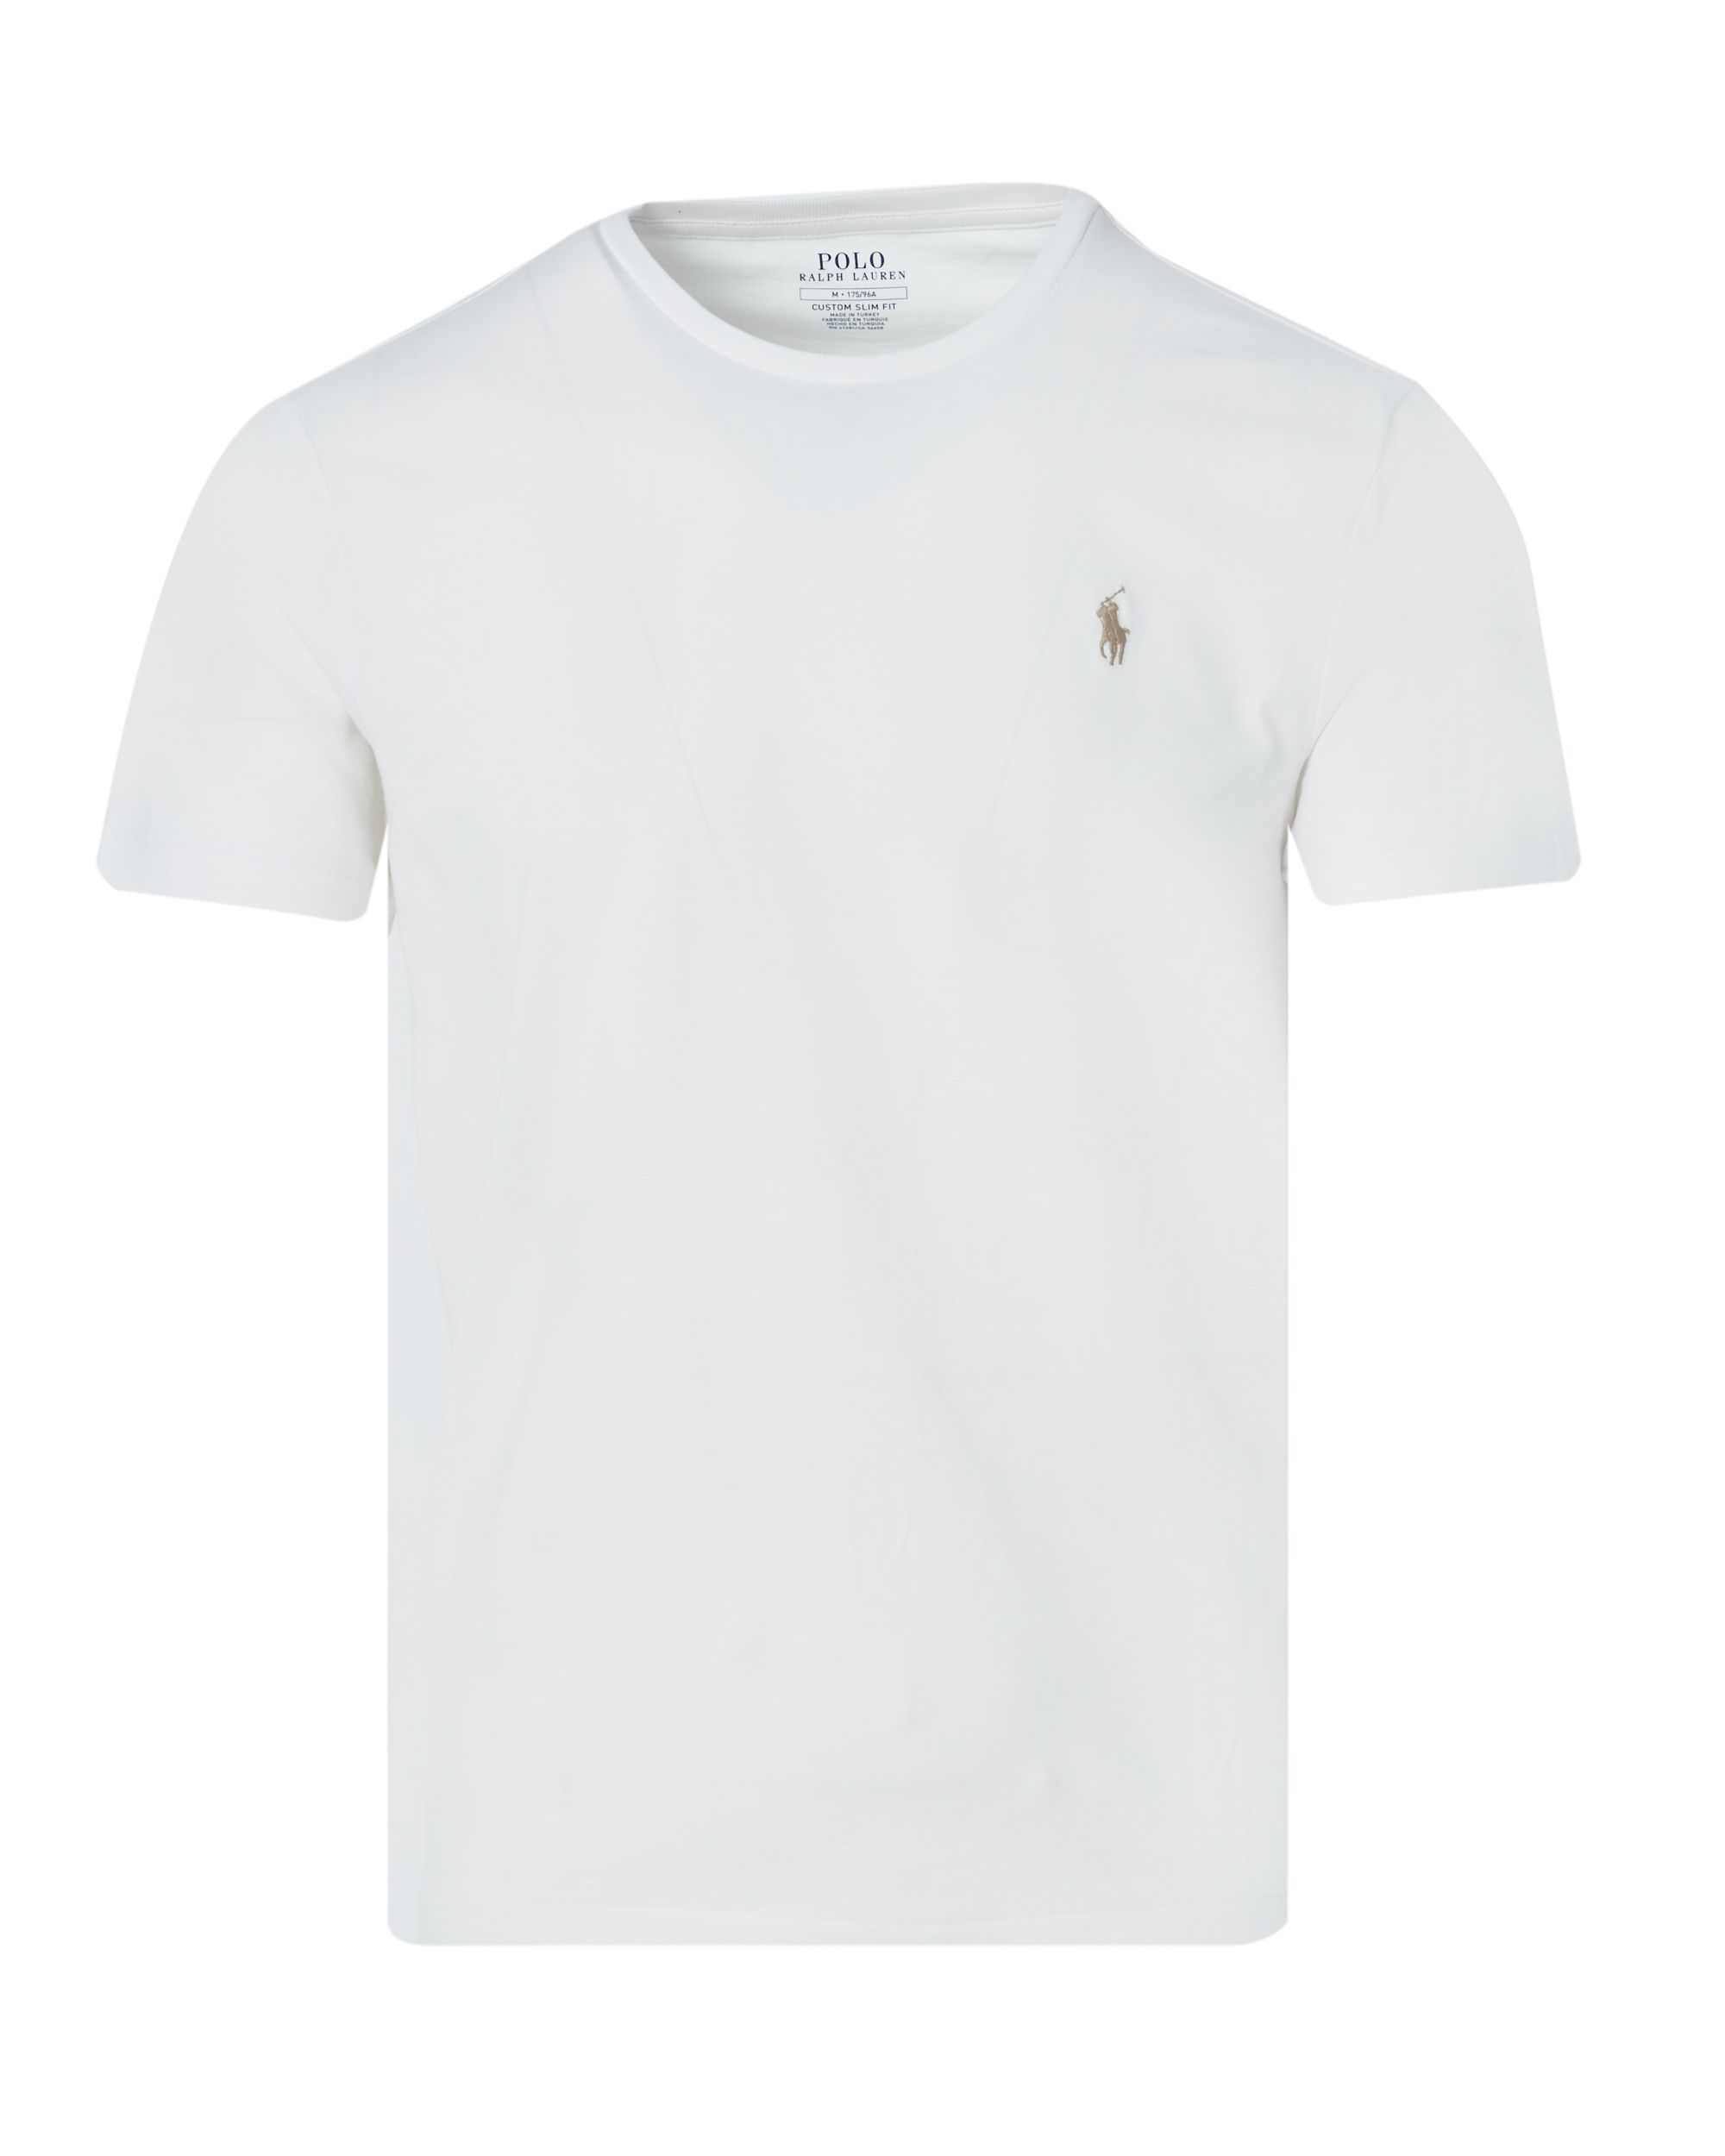 Polo Ralph Lauren T-shirt KM Wit 083431-001-L